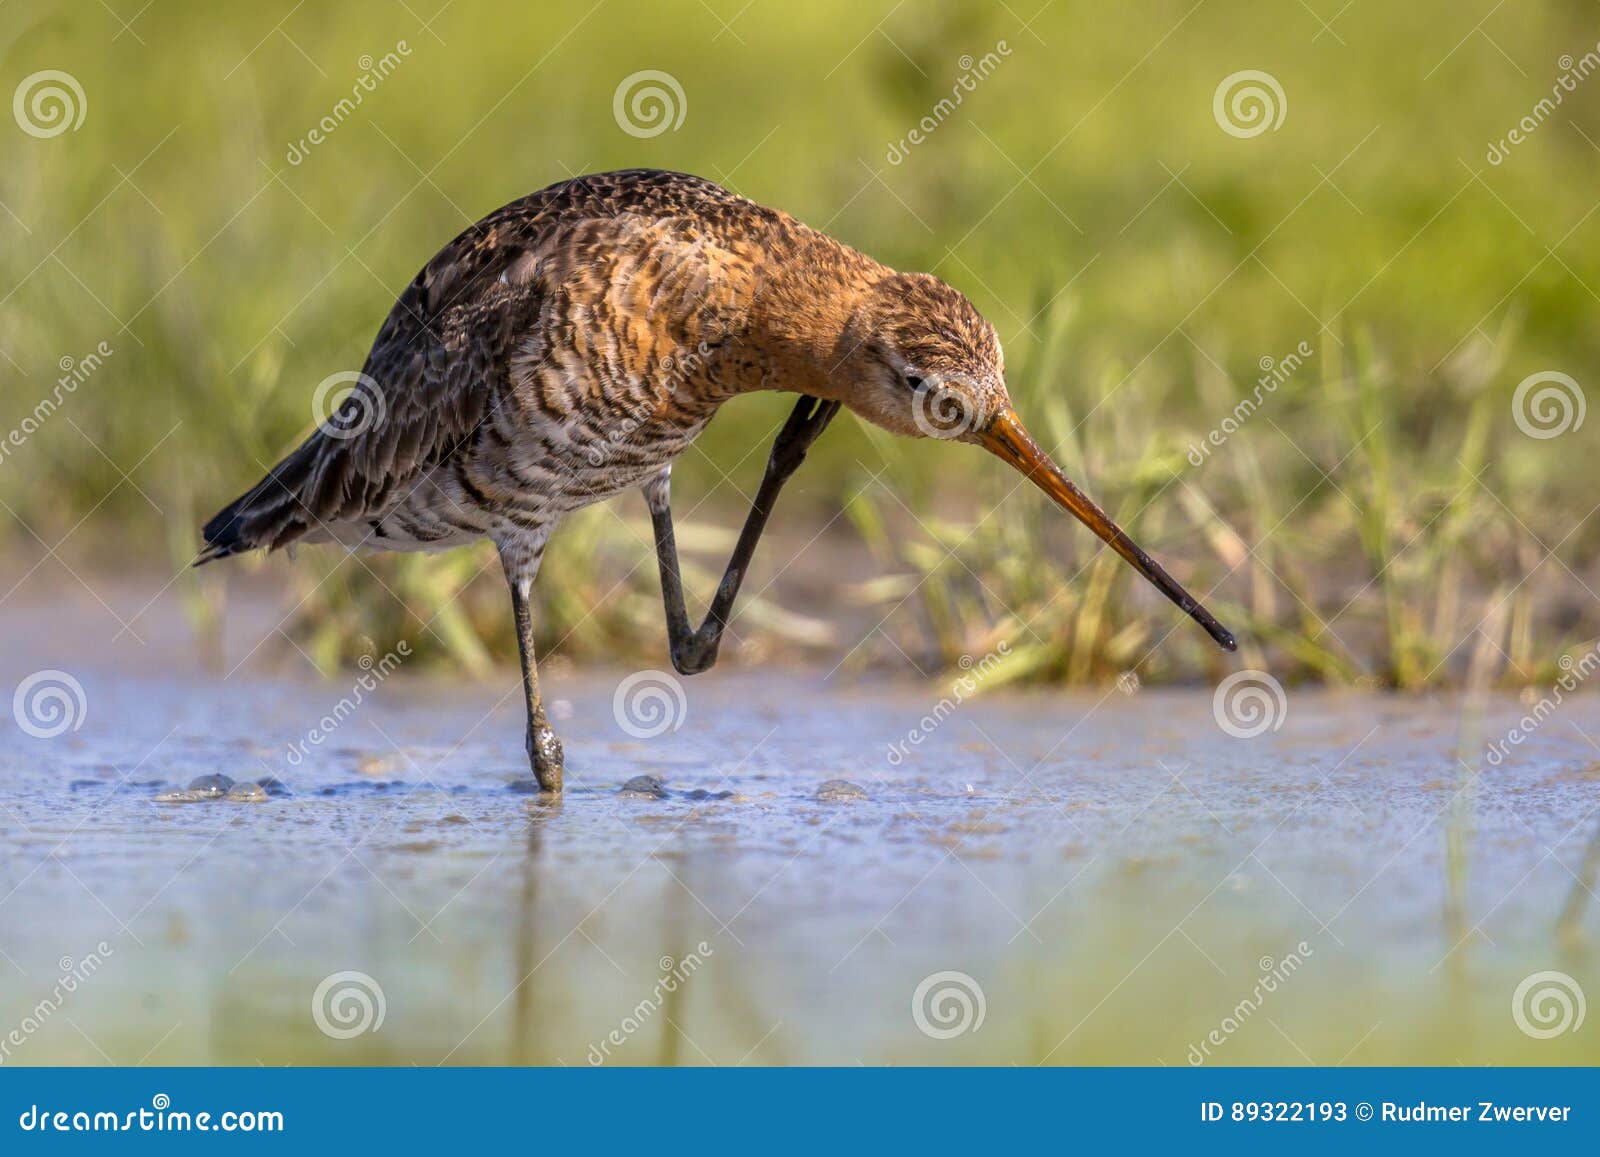 black-tailed godwit wader bird scratching neck